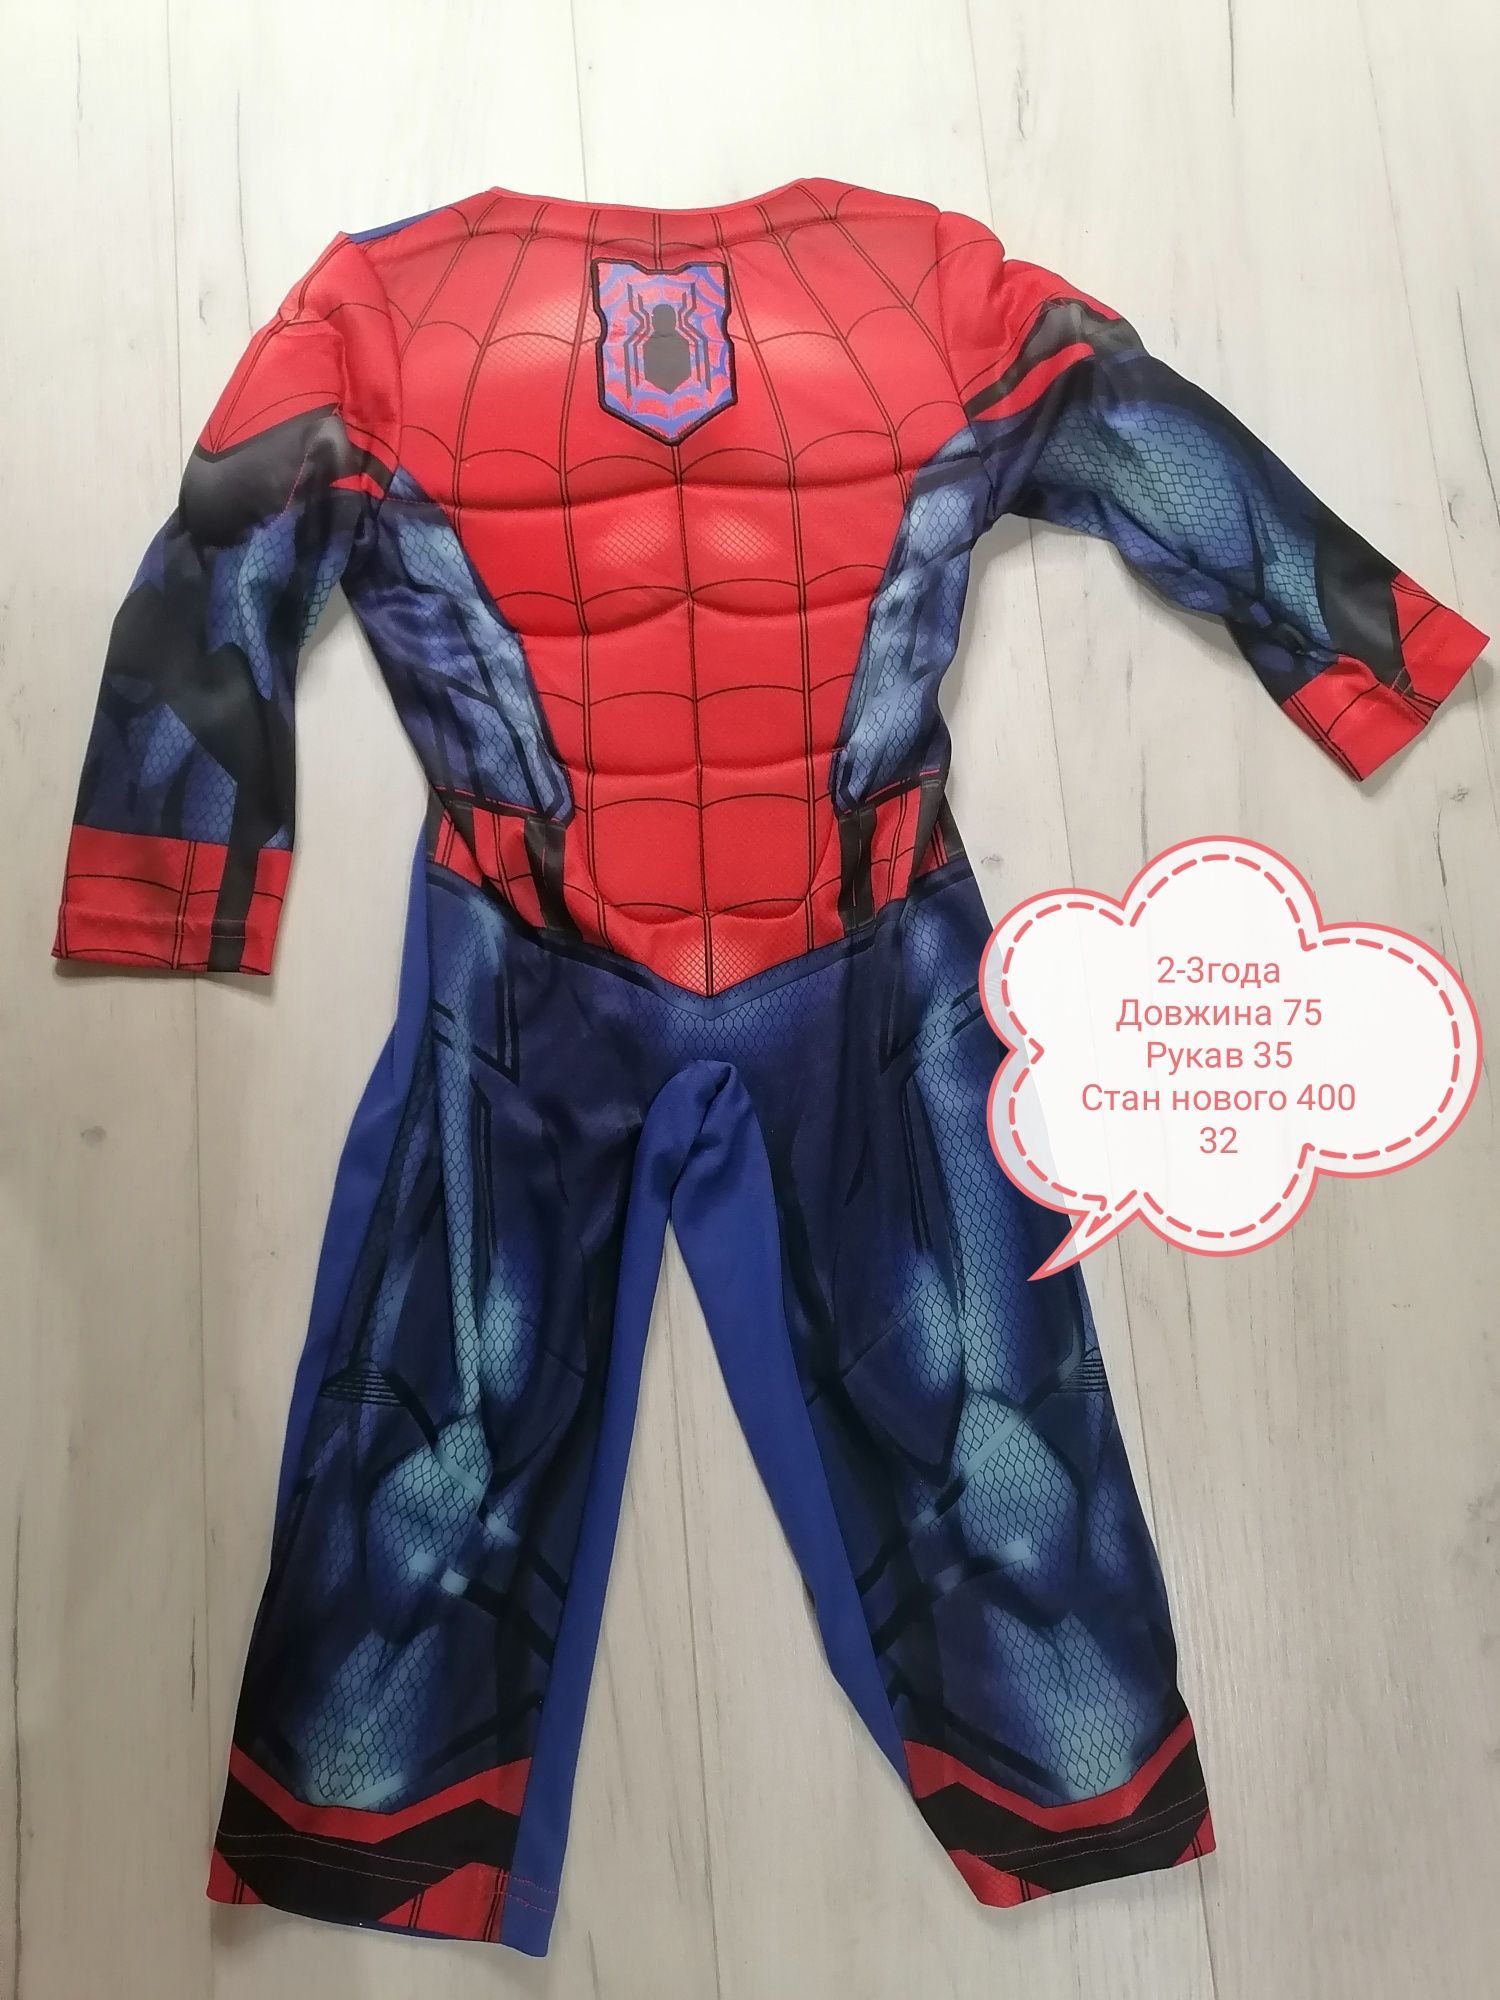 Человек паук, Спайдермен 3-4роки